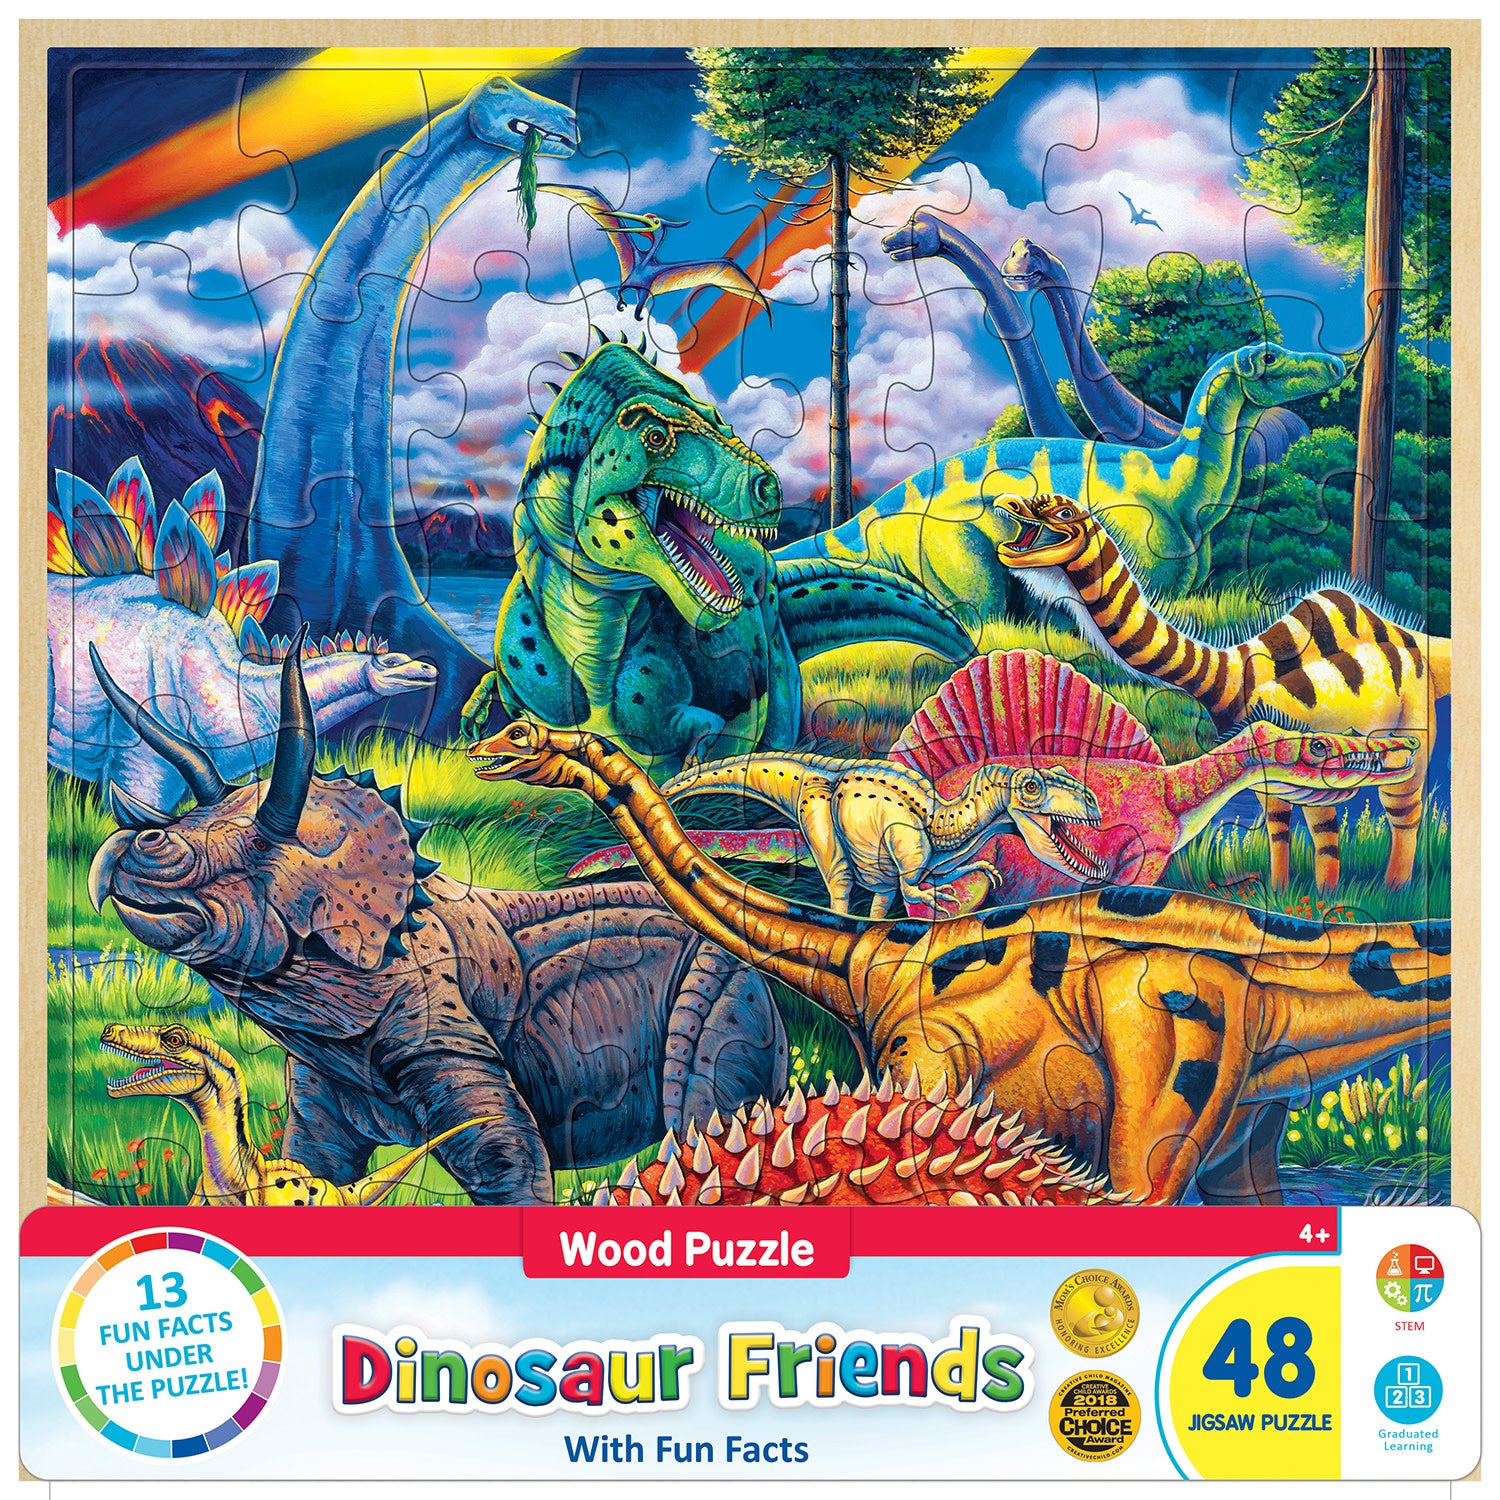 Wood Fun Facts - Dinosaur Friends 48 Piece Wood Puzzle